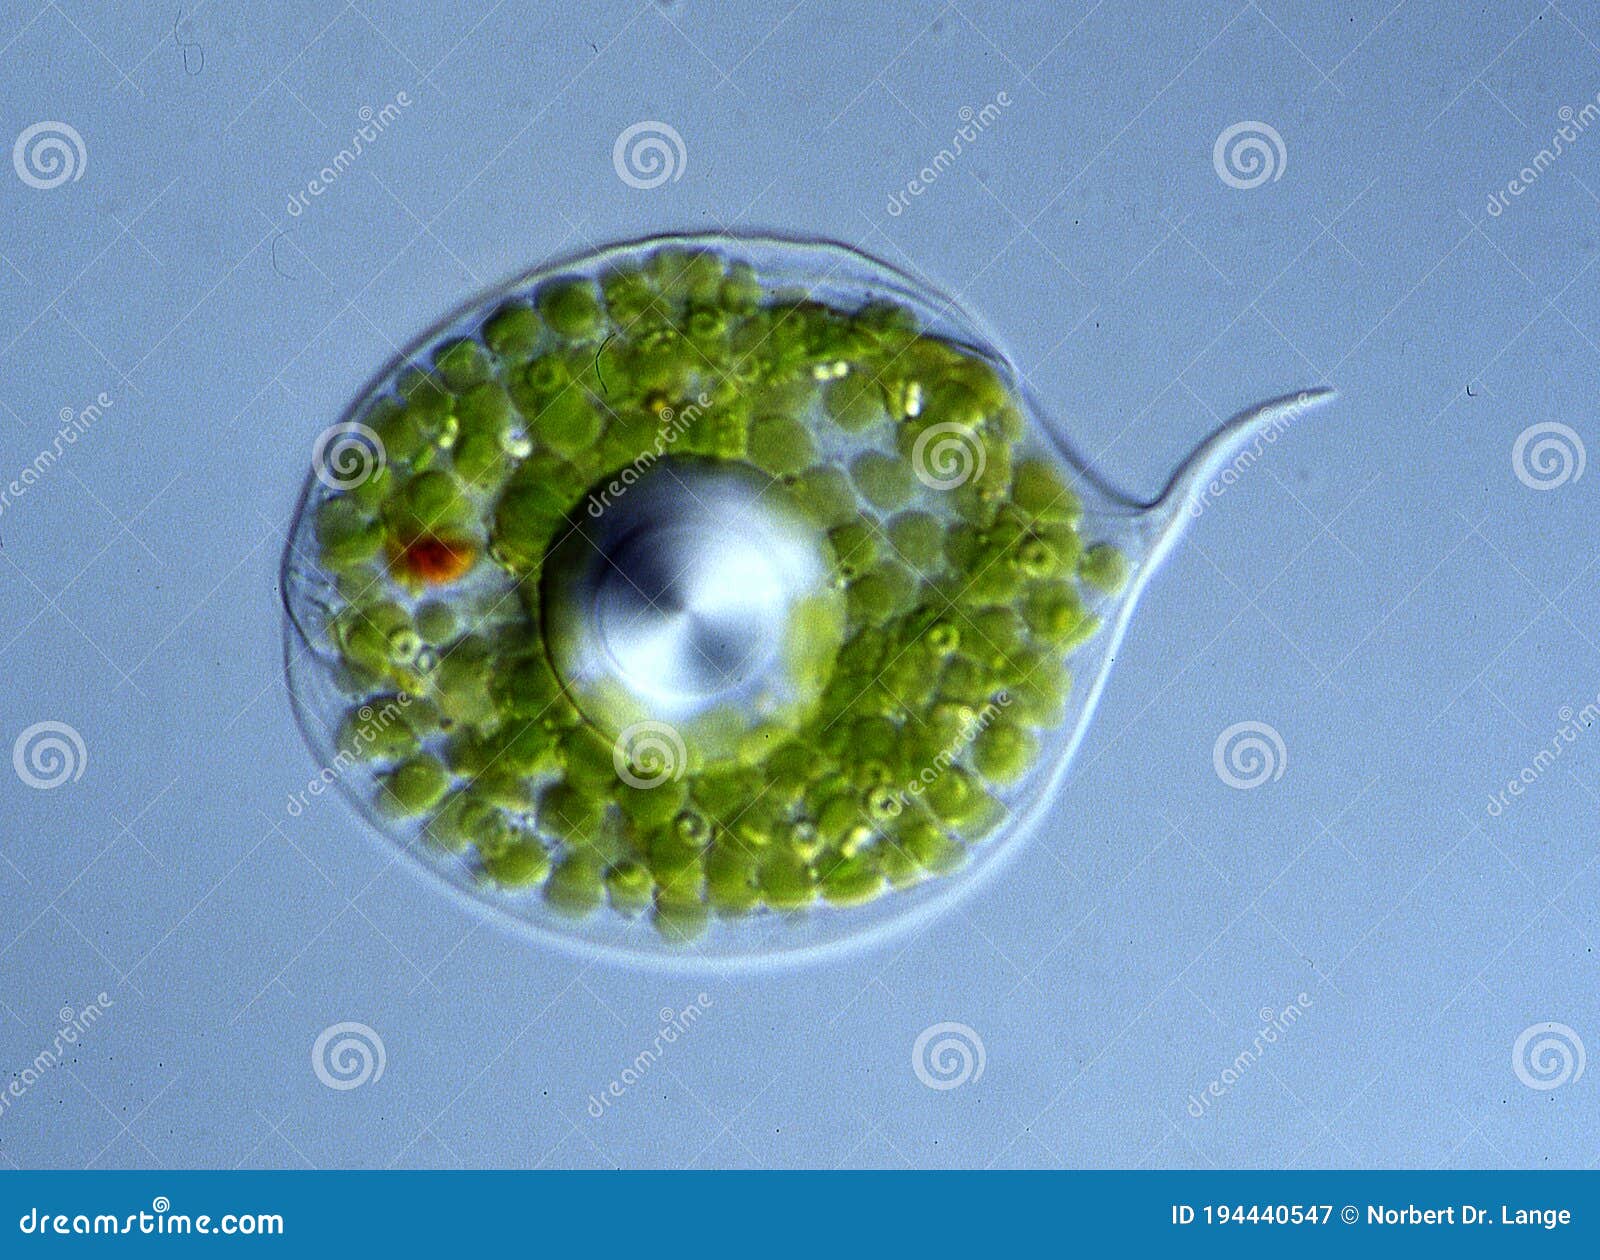 eye flagellate with green chloroplasts